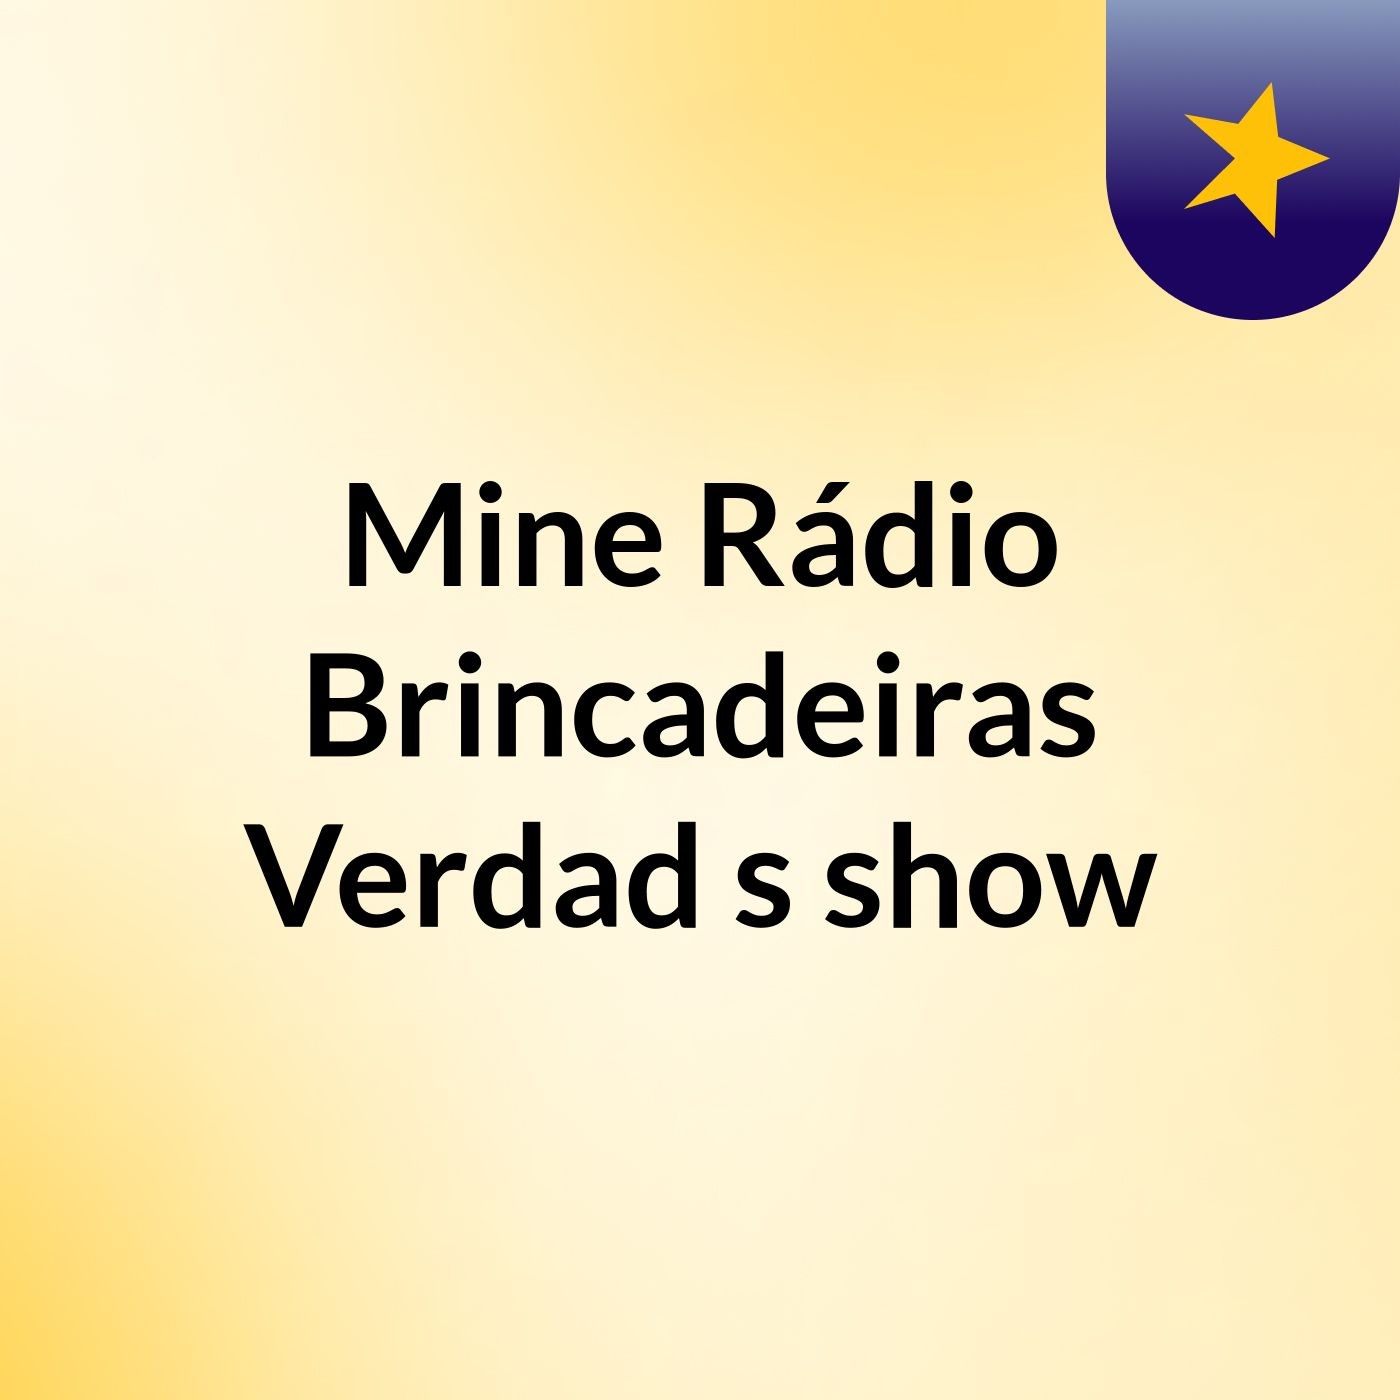 Mine Rádio Brincadeiras,Verdad's show